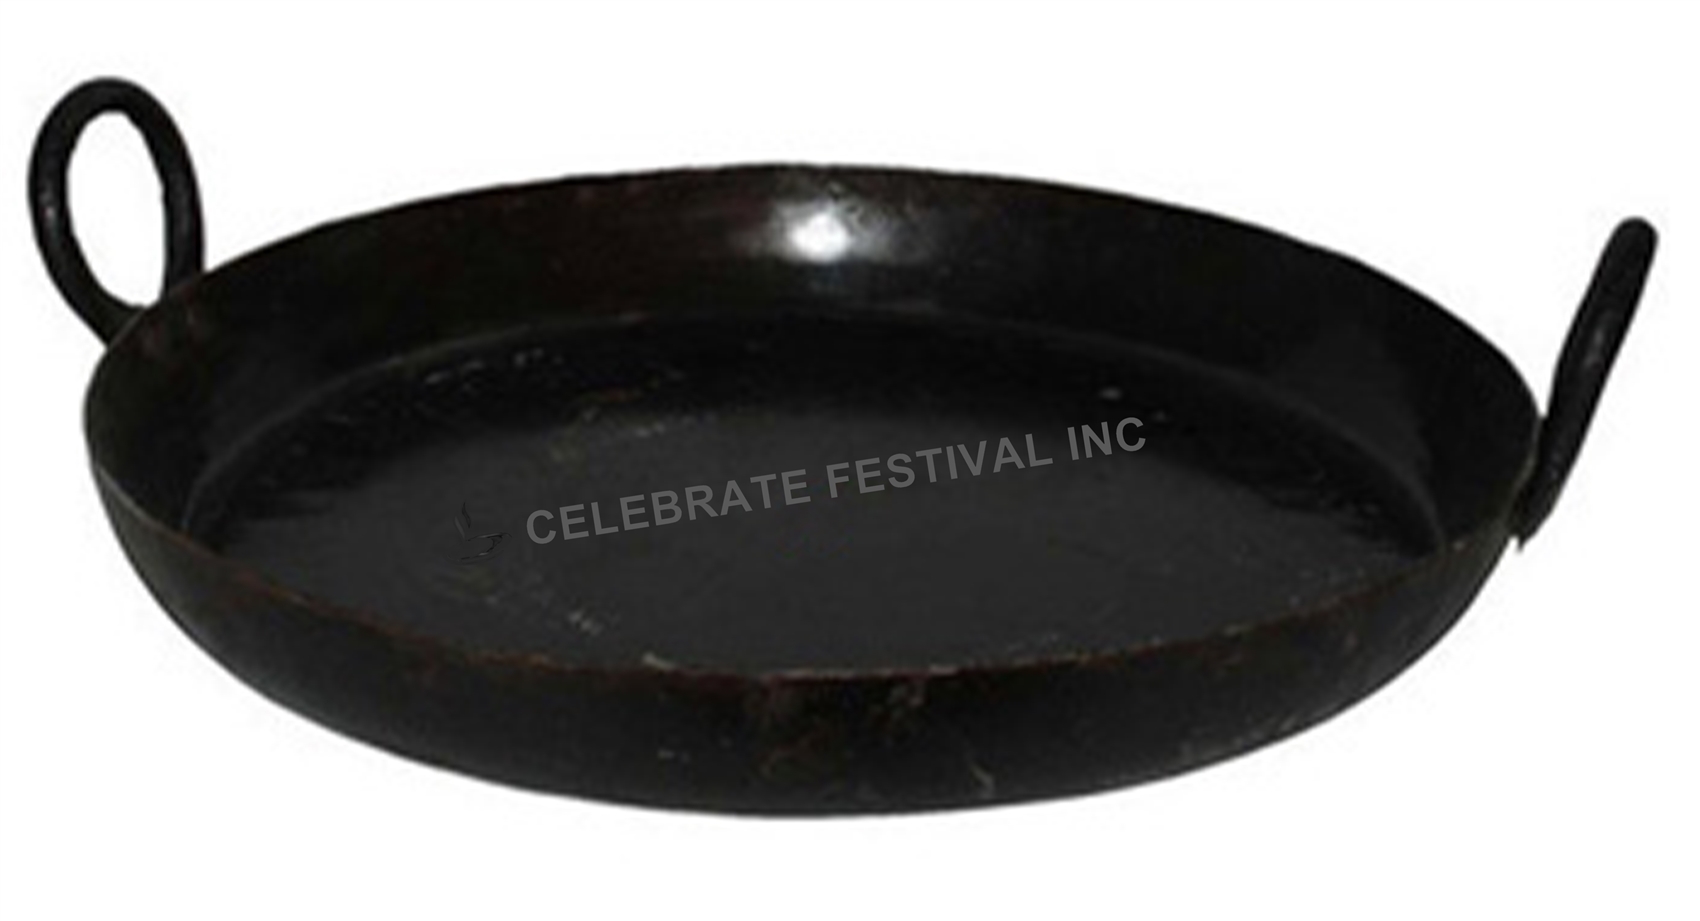 Iron Jalebi Kadai / flat wok-30" - Made available by Celebrate Festival Inc